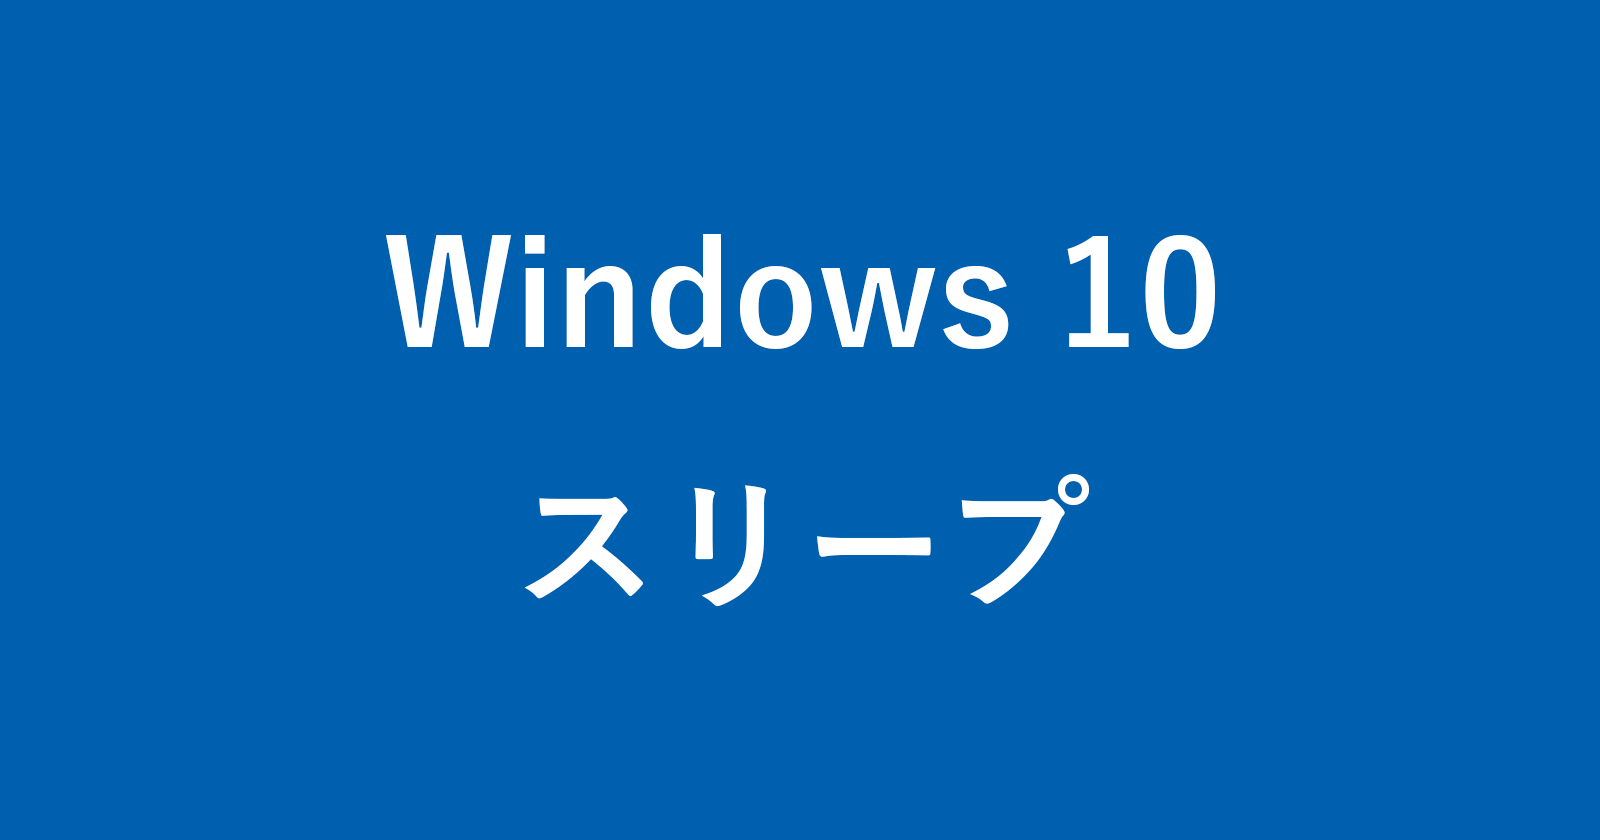 windows 10 sleep